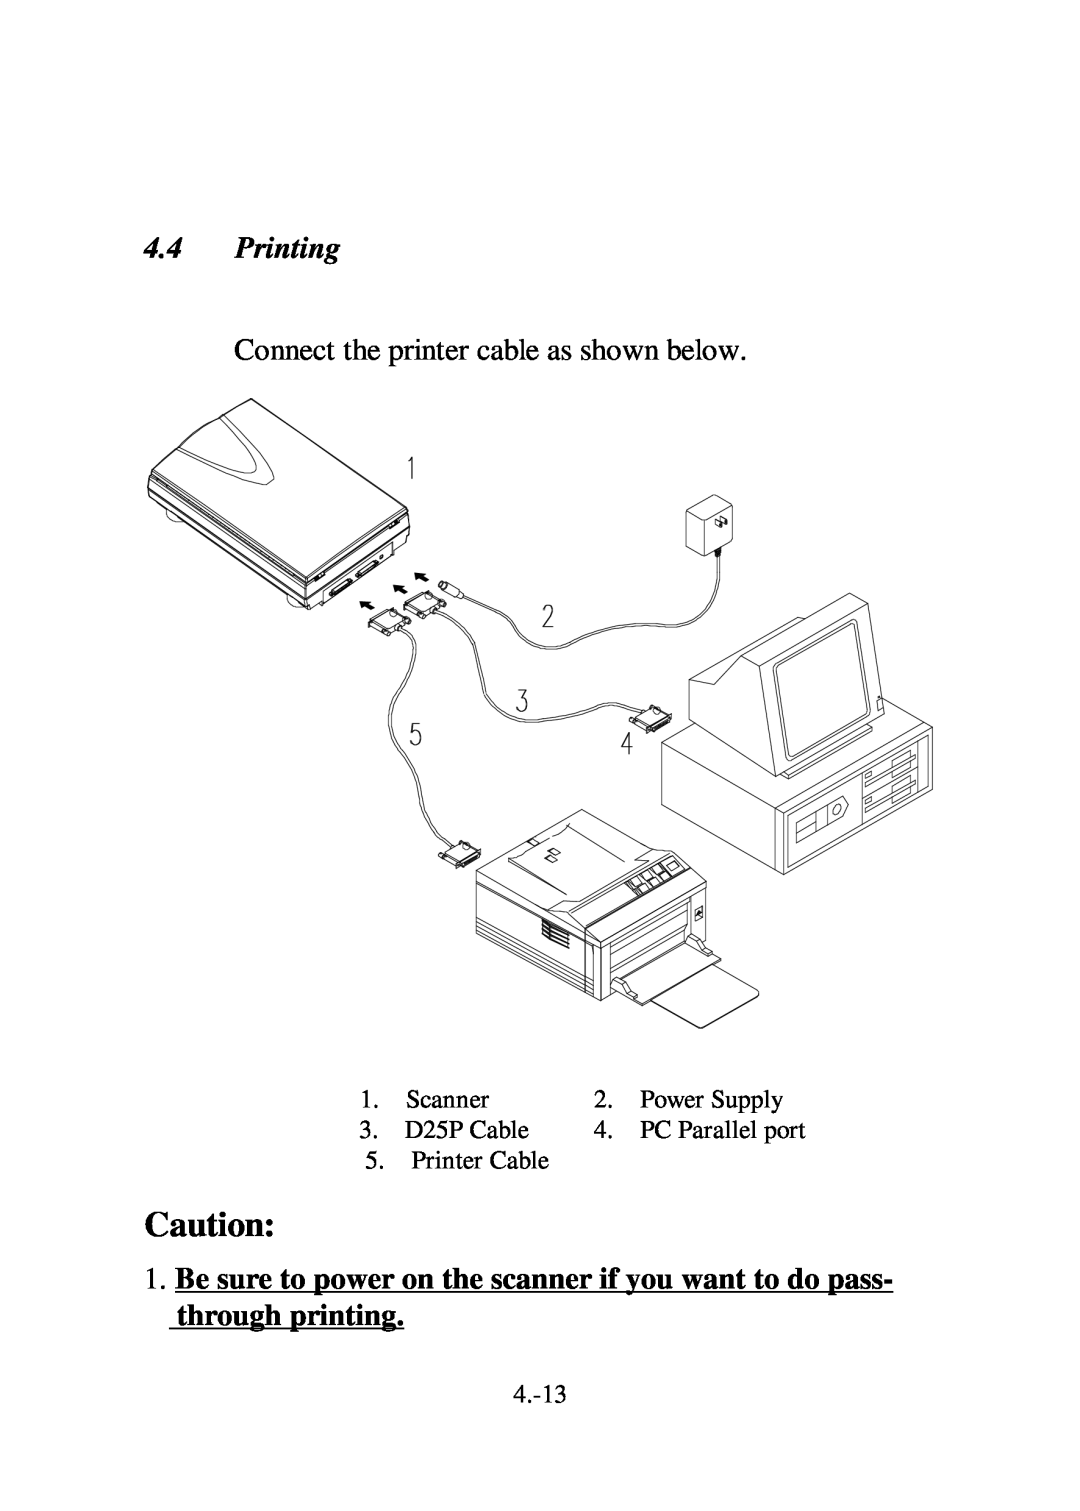 IBM Ricoh FB735 user manual Printing, Connect the printer cable as shown below 